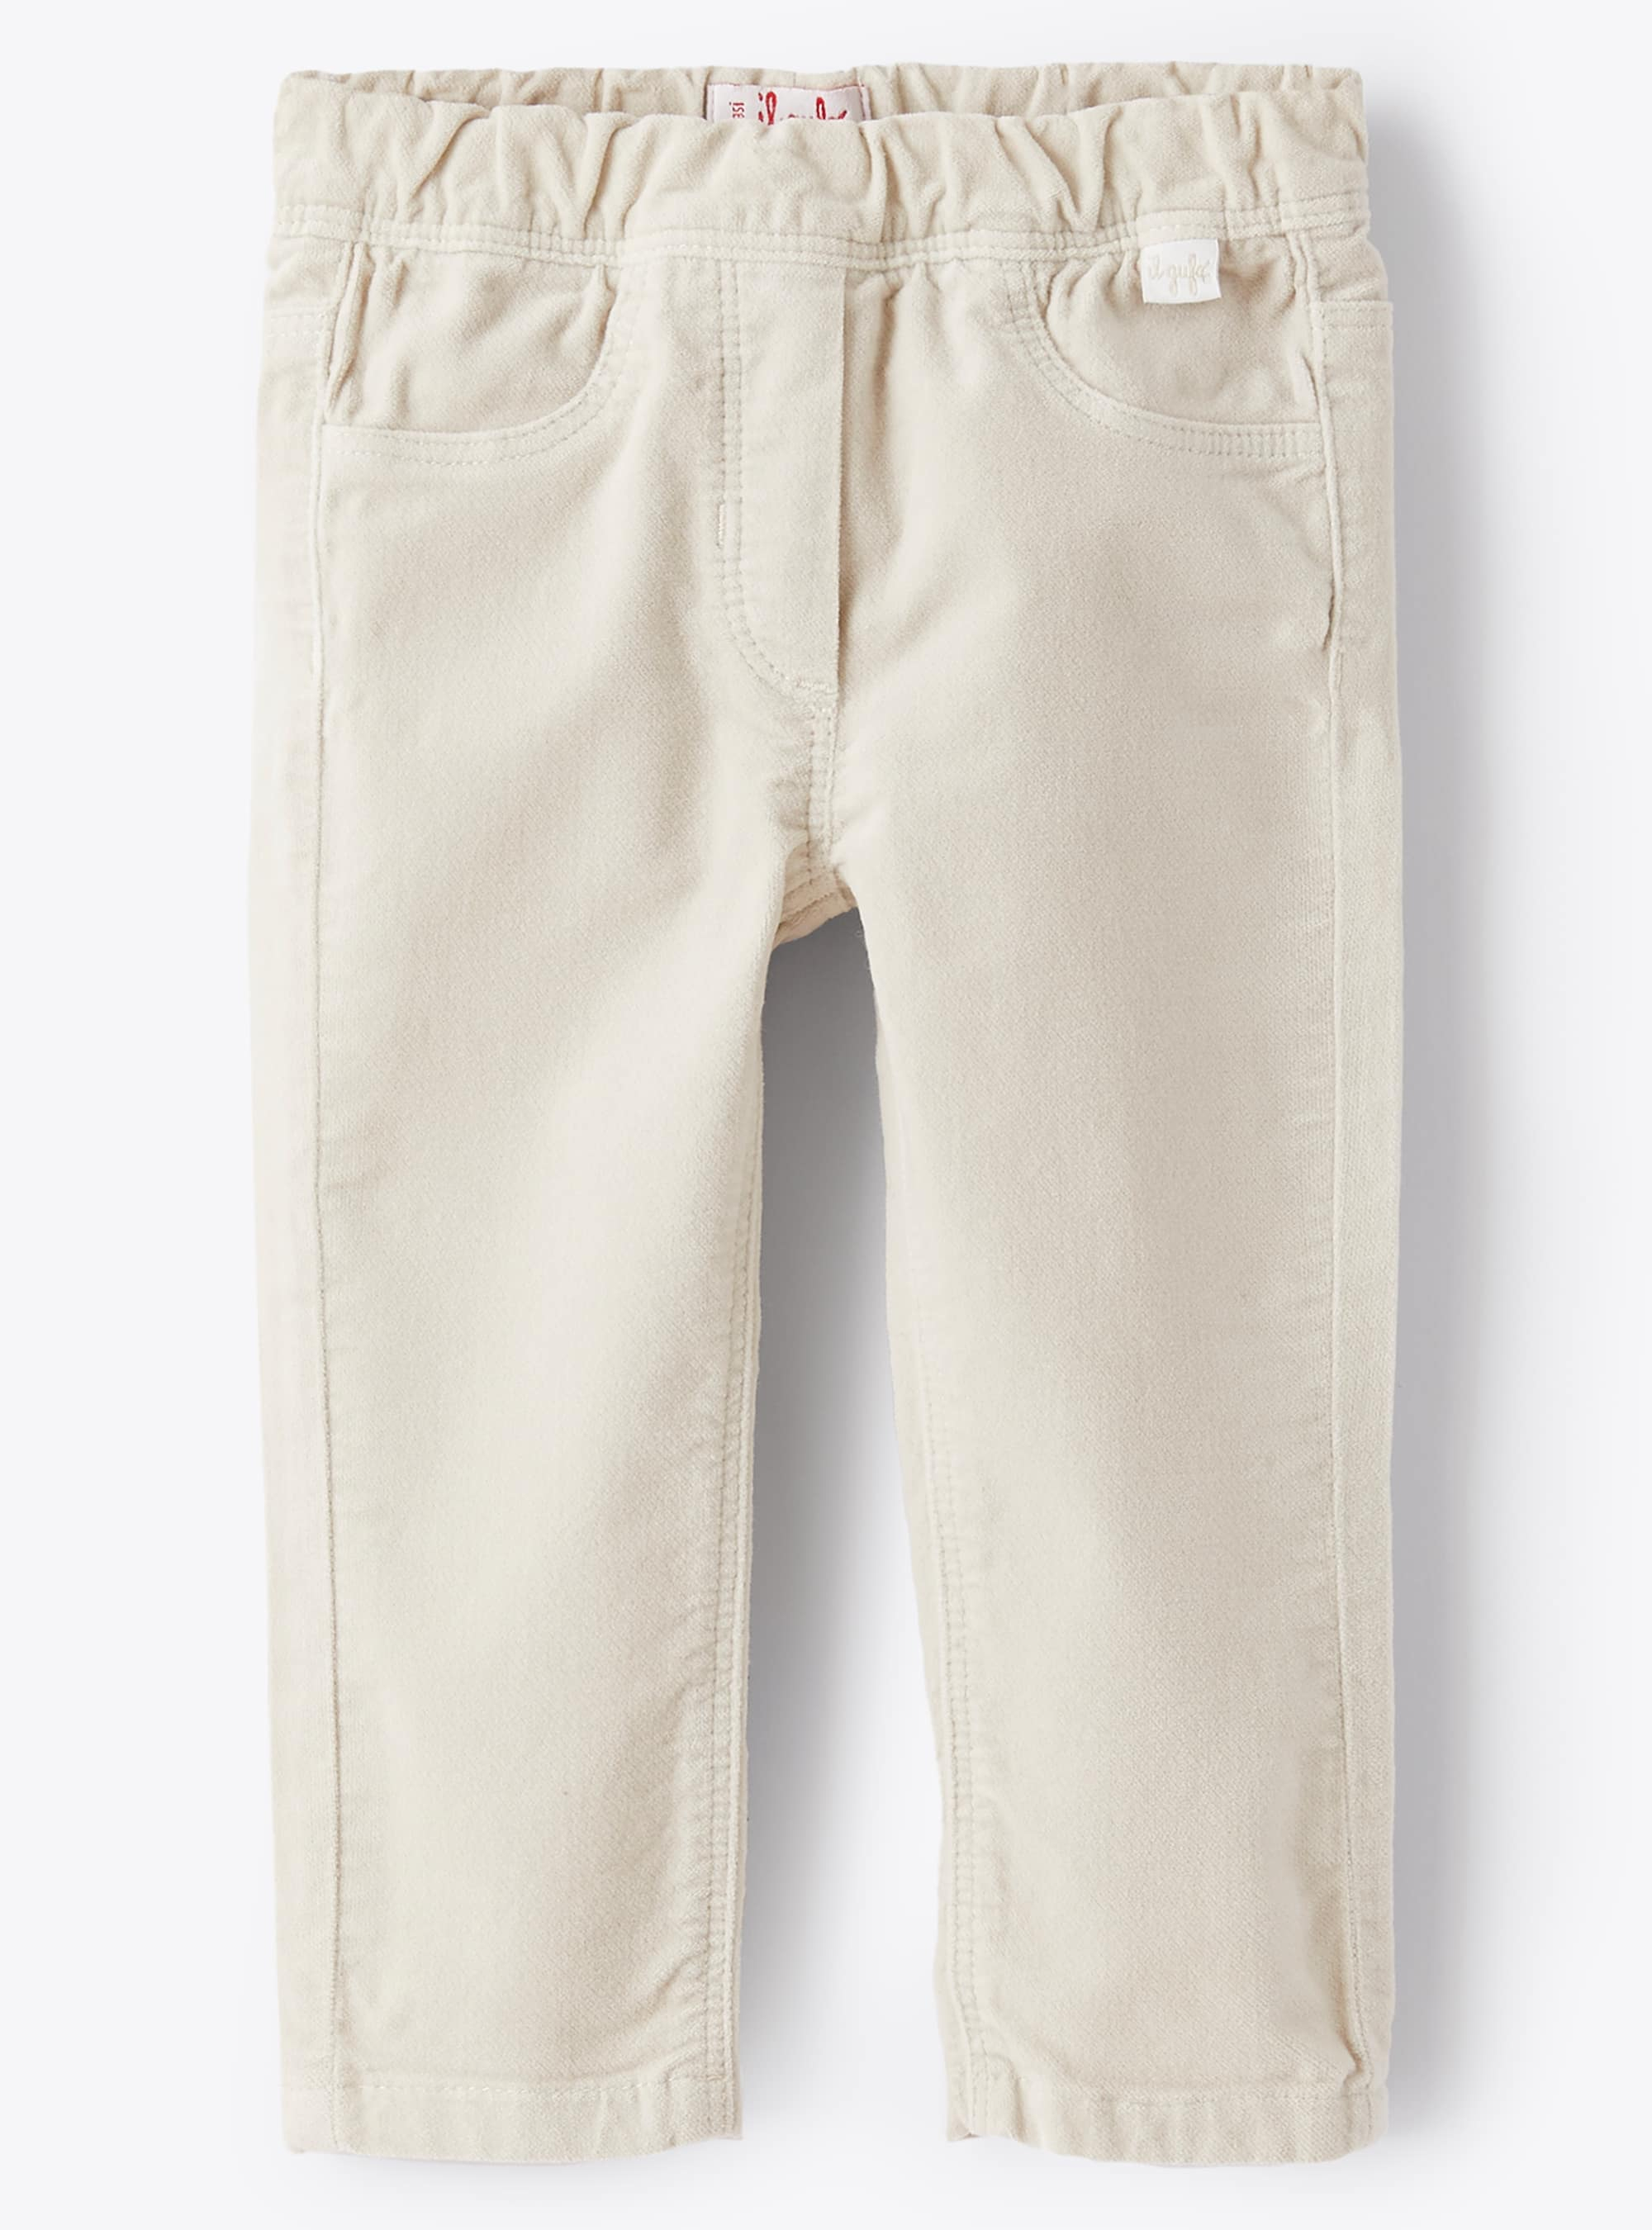 Облегающие брюки из бархата цвета льда - Брюки - Il Gufo